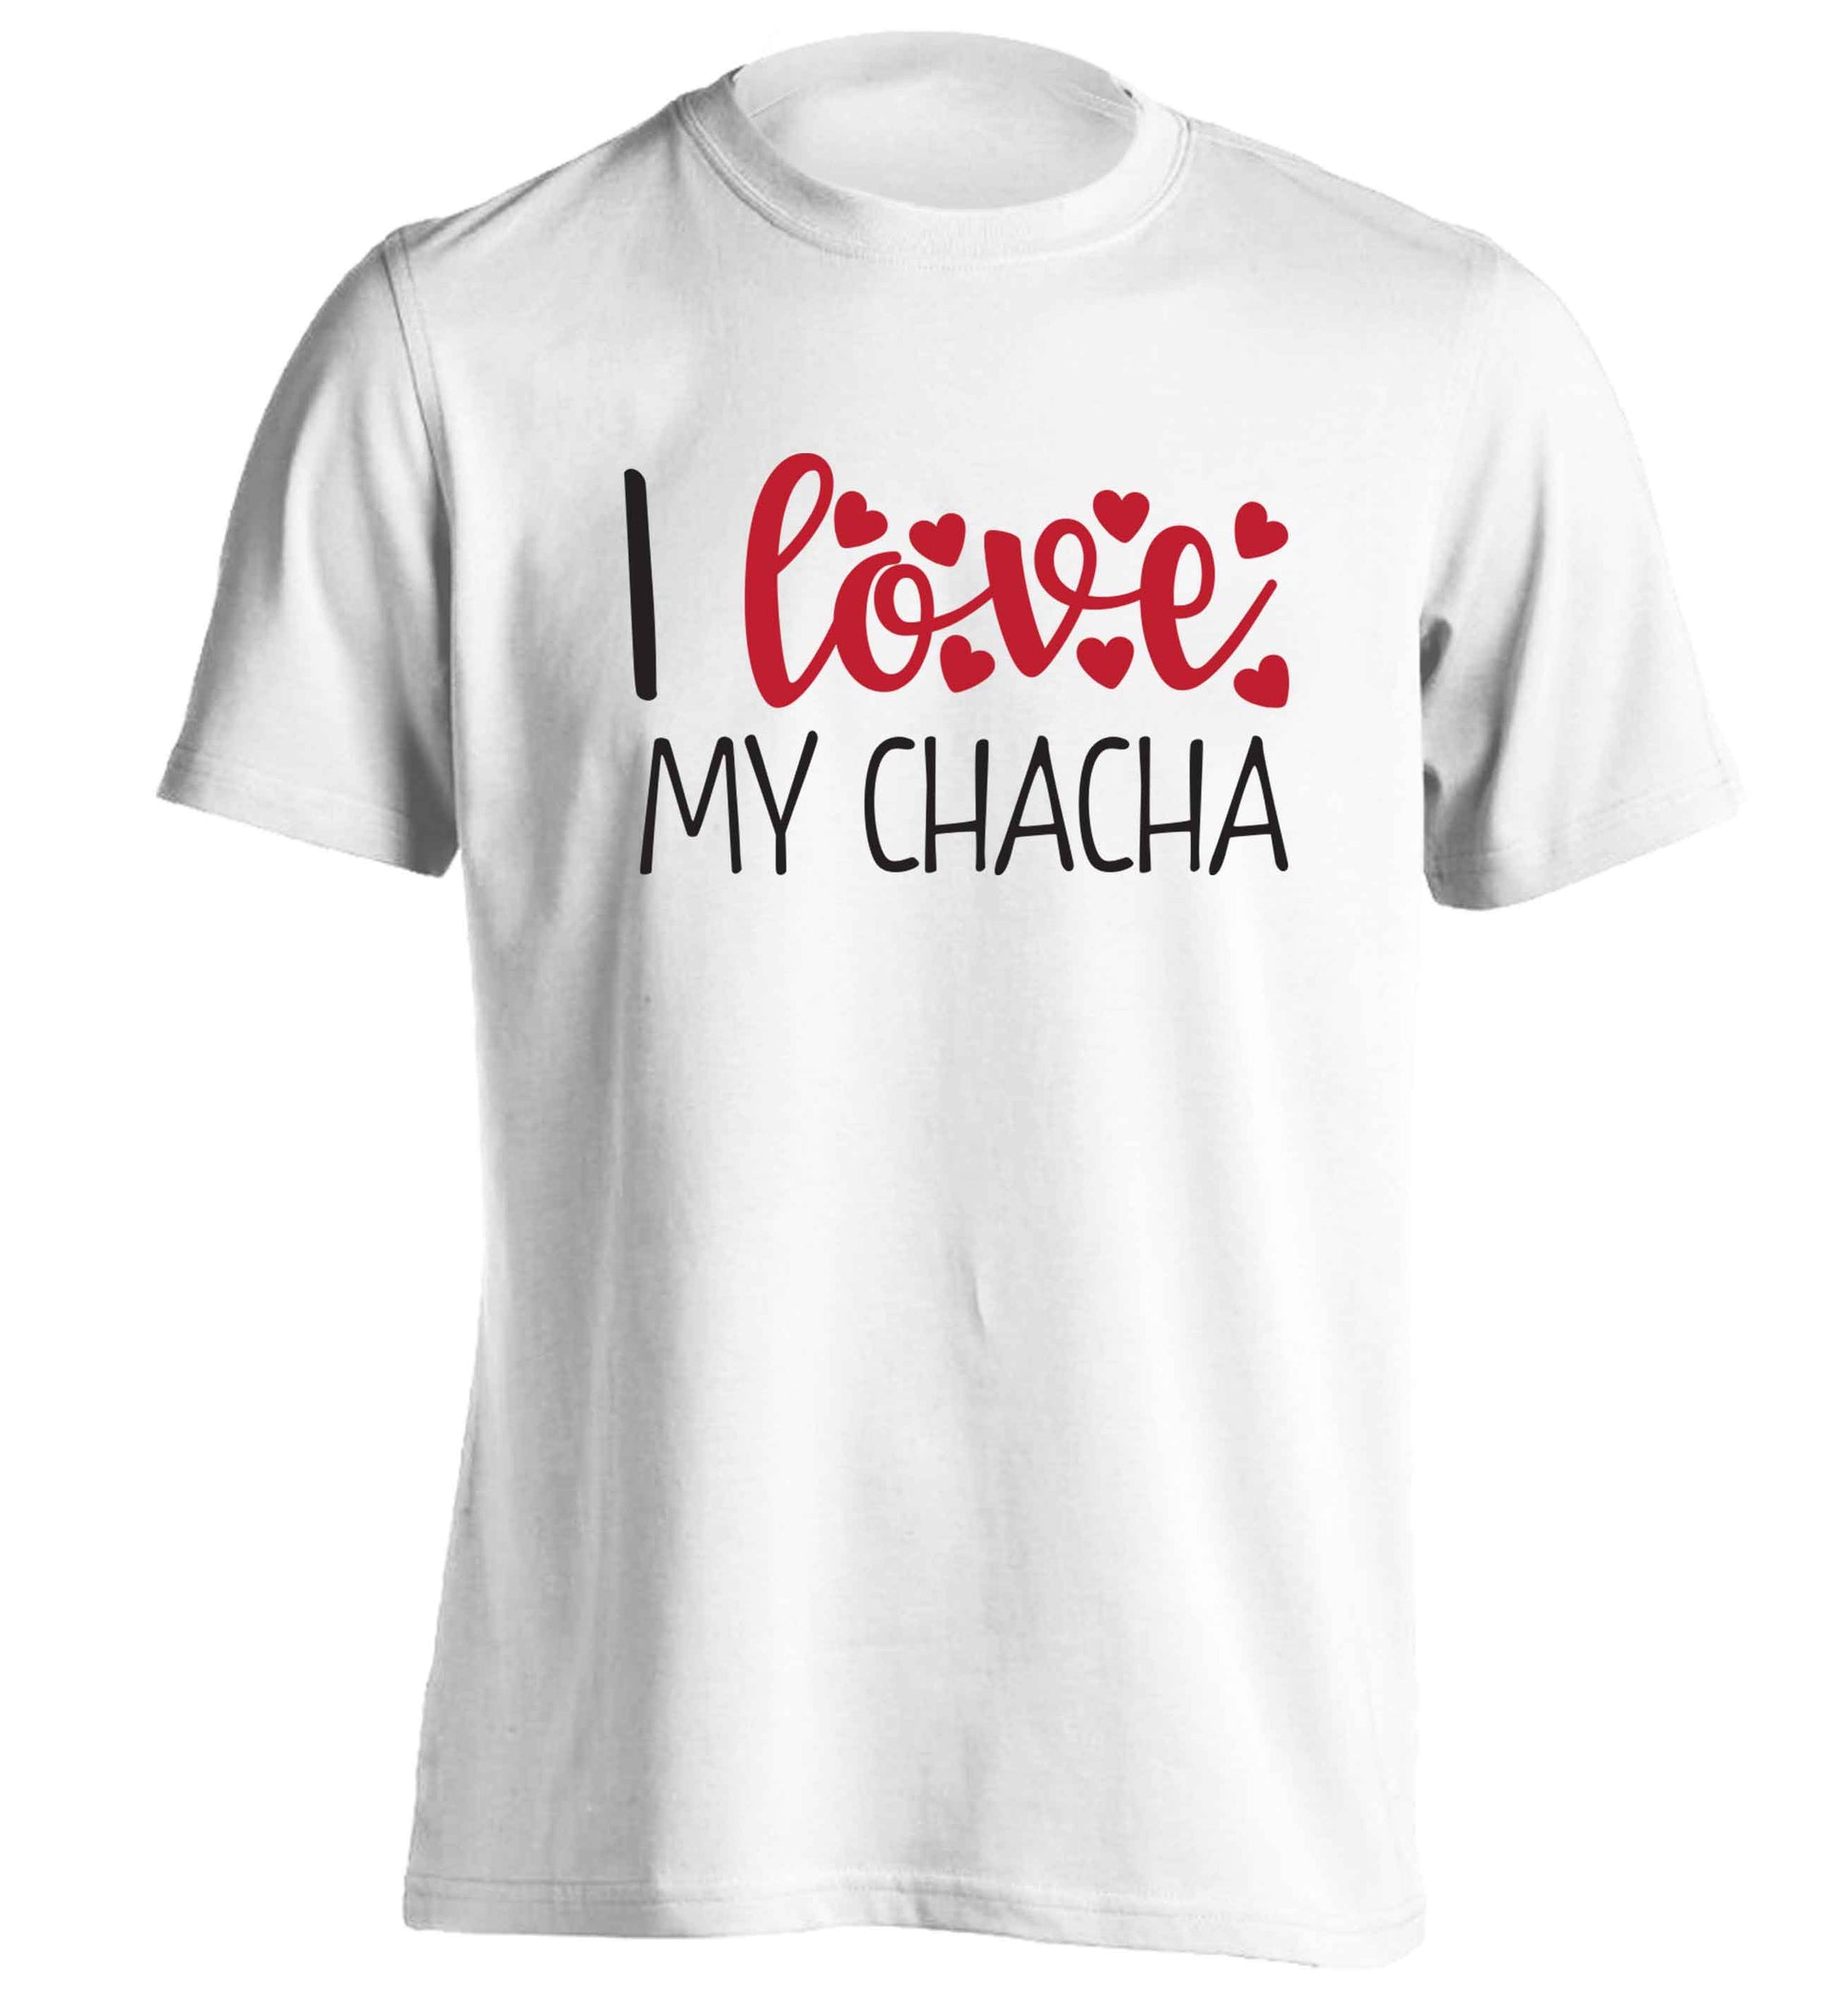 I love my chacha adults unisex white Tshirt 2XL